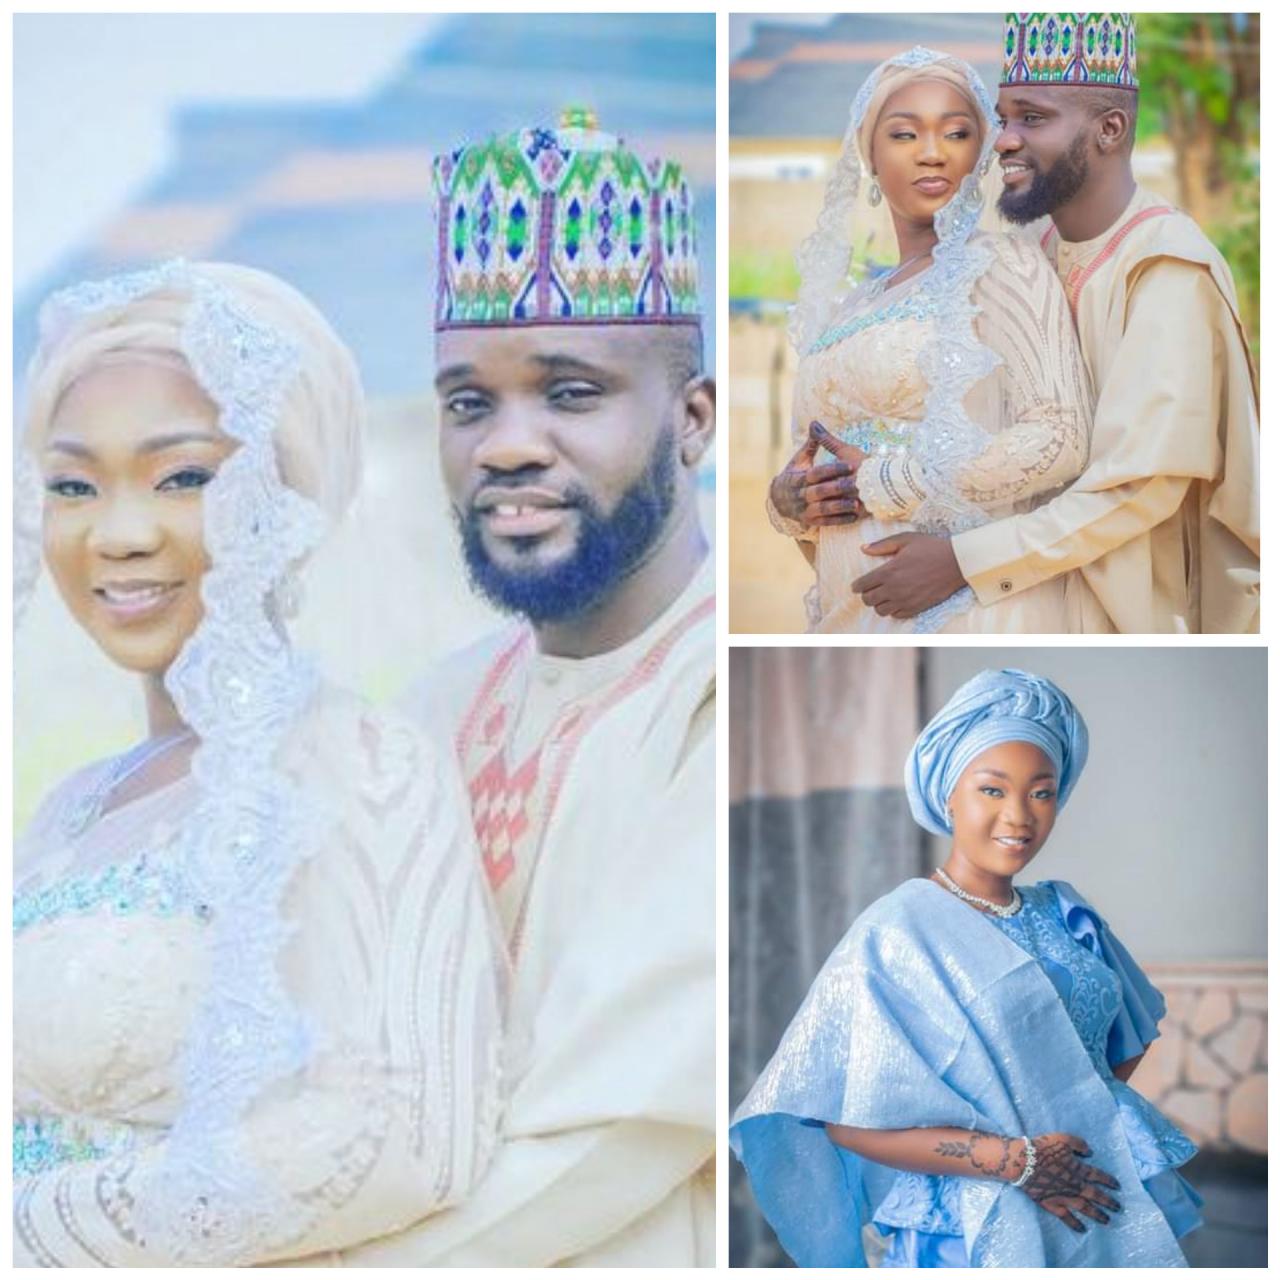 Nigerian man converts to Islam to marry his Muslim bride (photos)